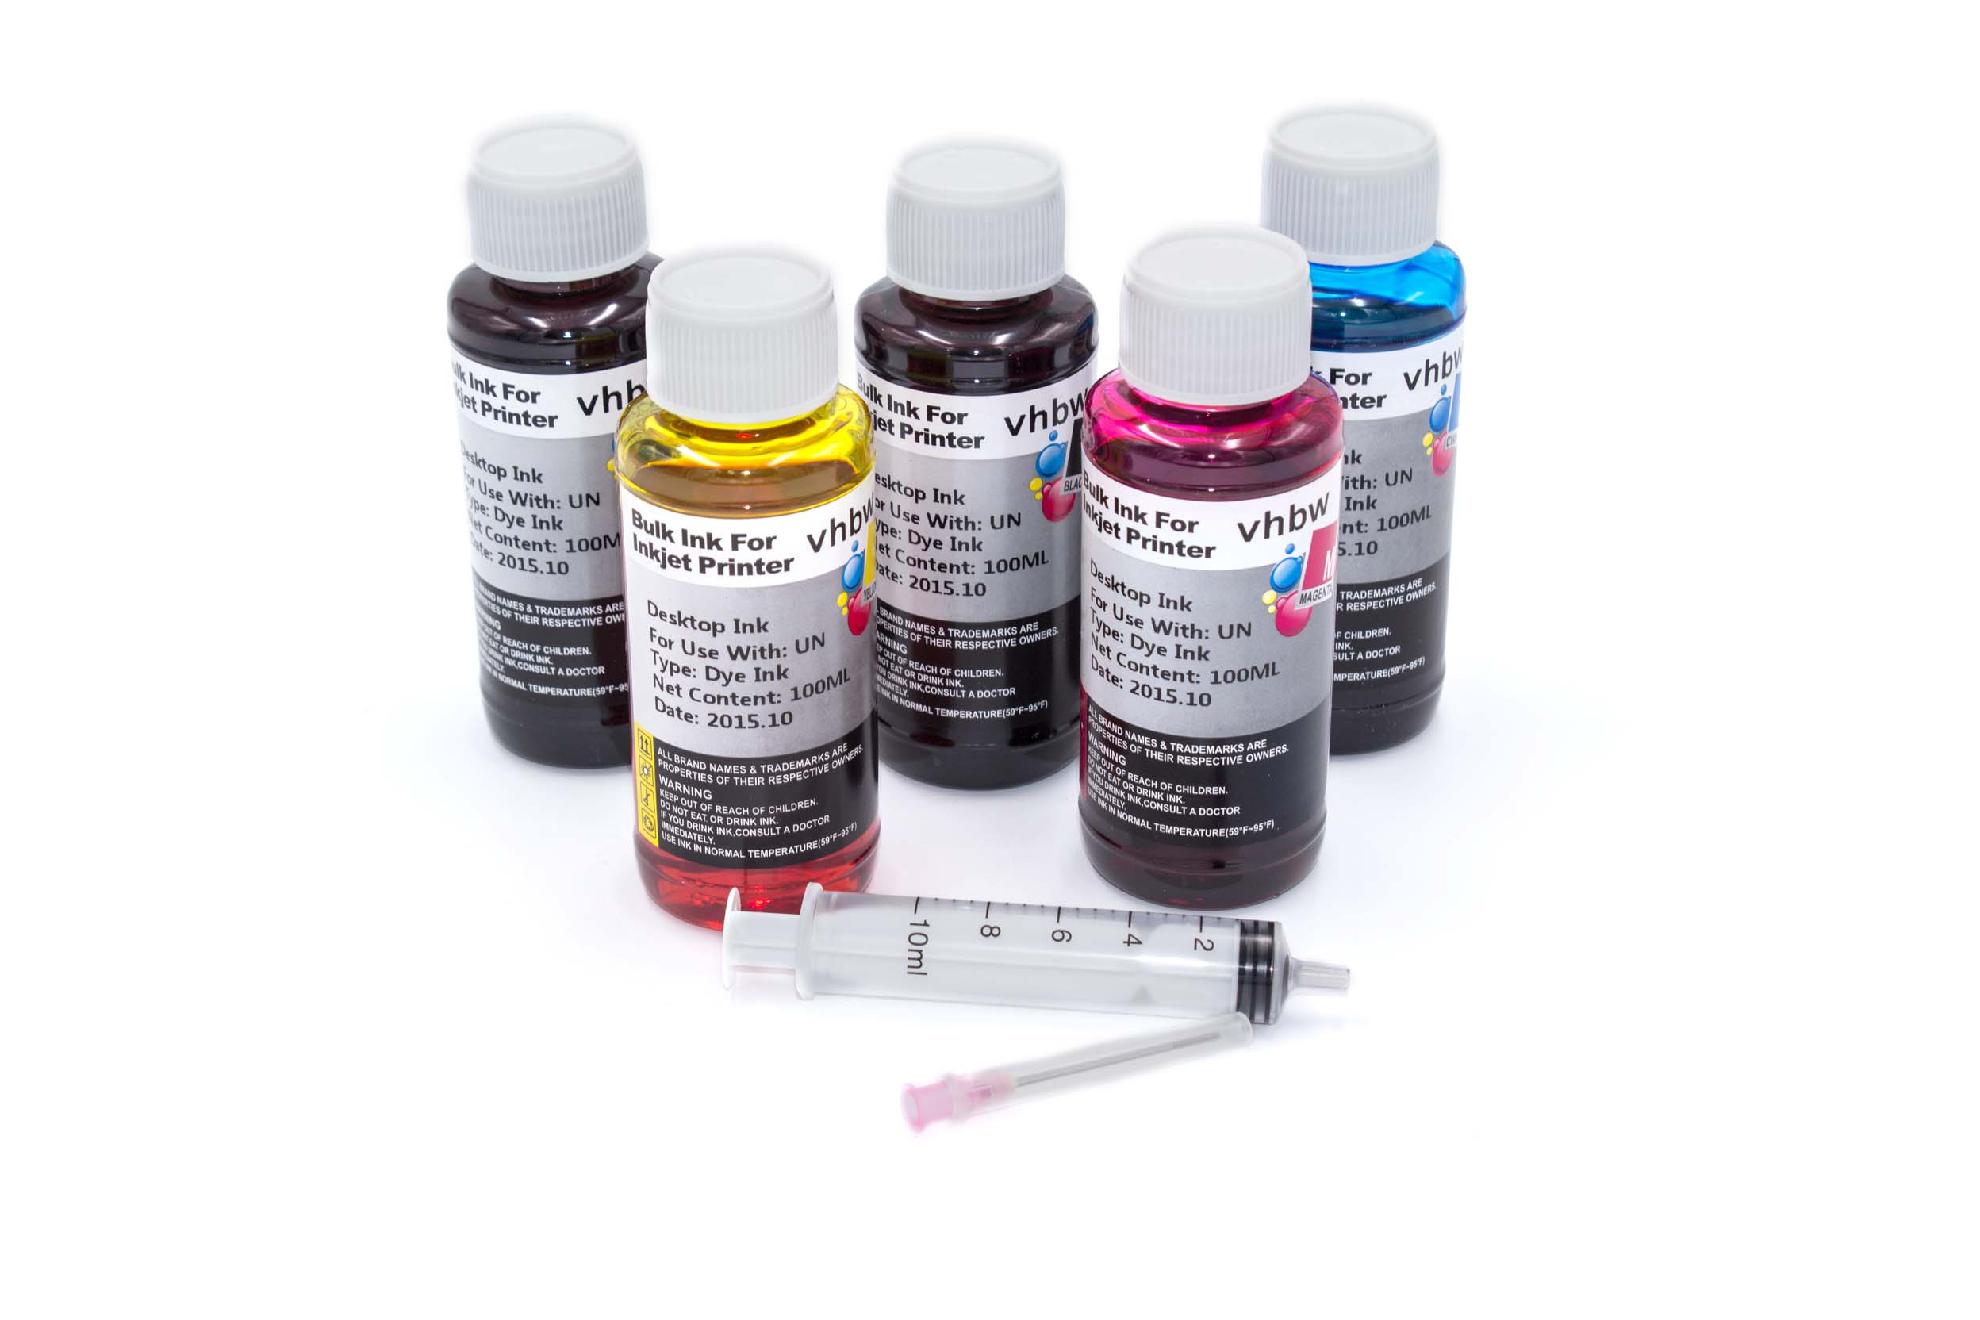 5x Refill Ink Multi-Coloured suitable for Canon, Pixma Printers etc - refill set 100ml